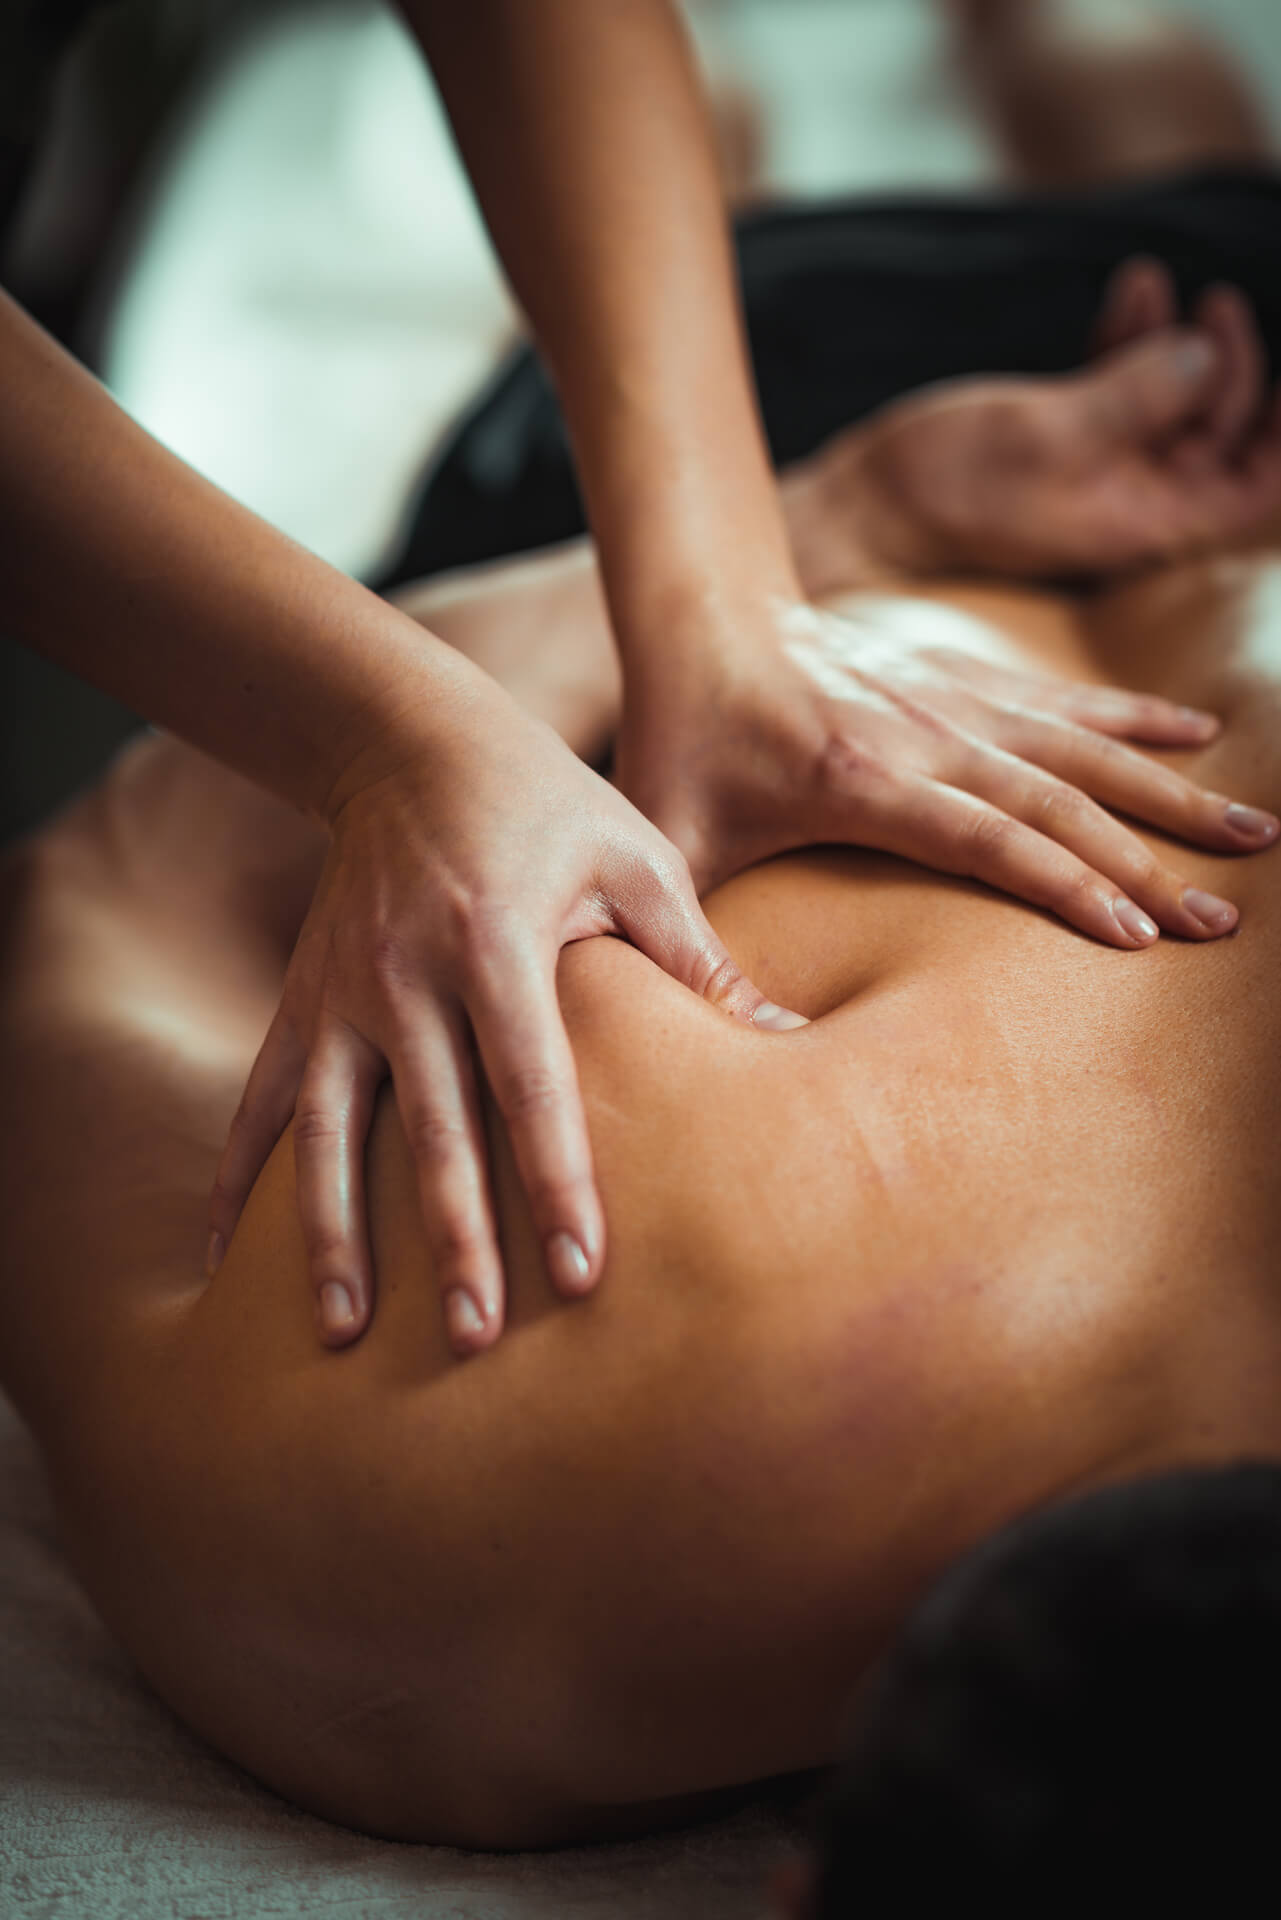 Shoulder Sports Massage Therapy 2021 08 26 16 53 49 Utc 1 2 Physiotherapy: The Role Of A Physiotherapist In Sports Medicine